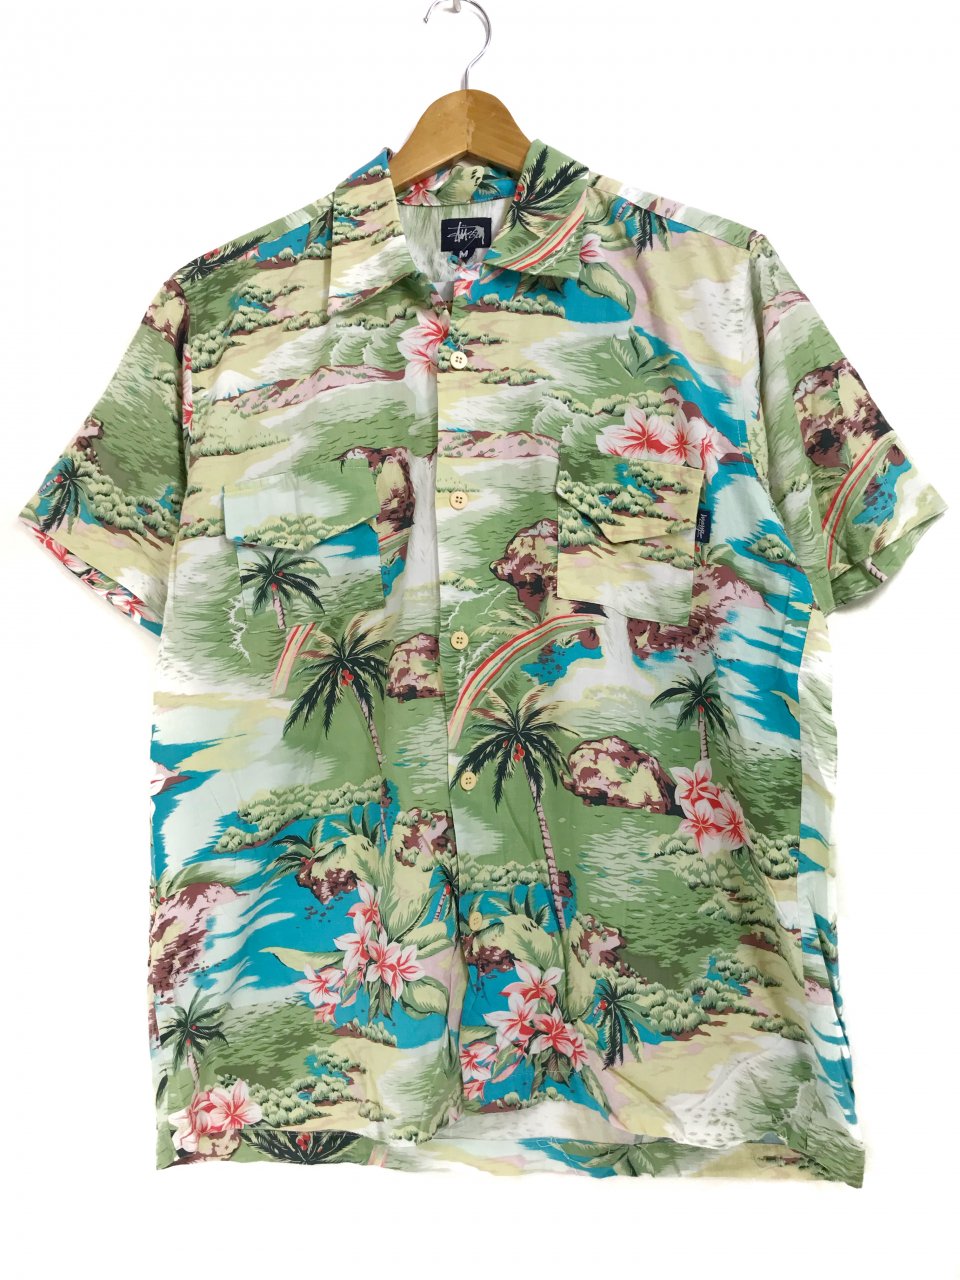 USA製 Deadstock 90s STUSSY Cotton Aloha Shirts #2 M デッドストック 